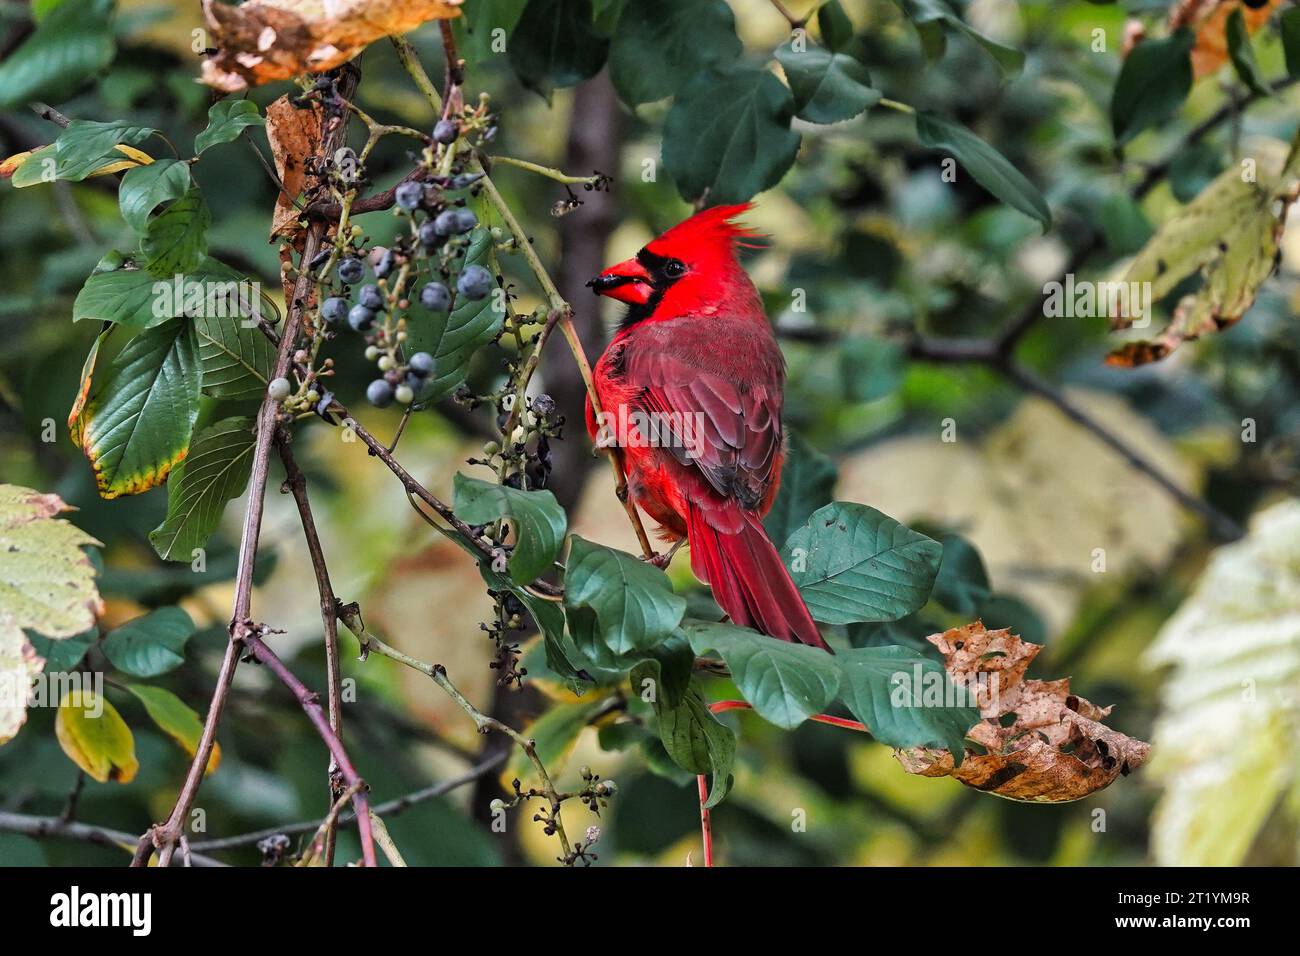 Cardinal feeding on berries in tree. Stock Photo